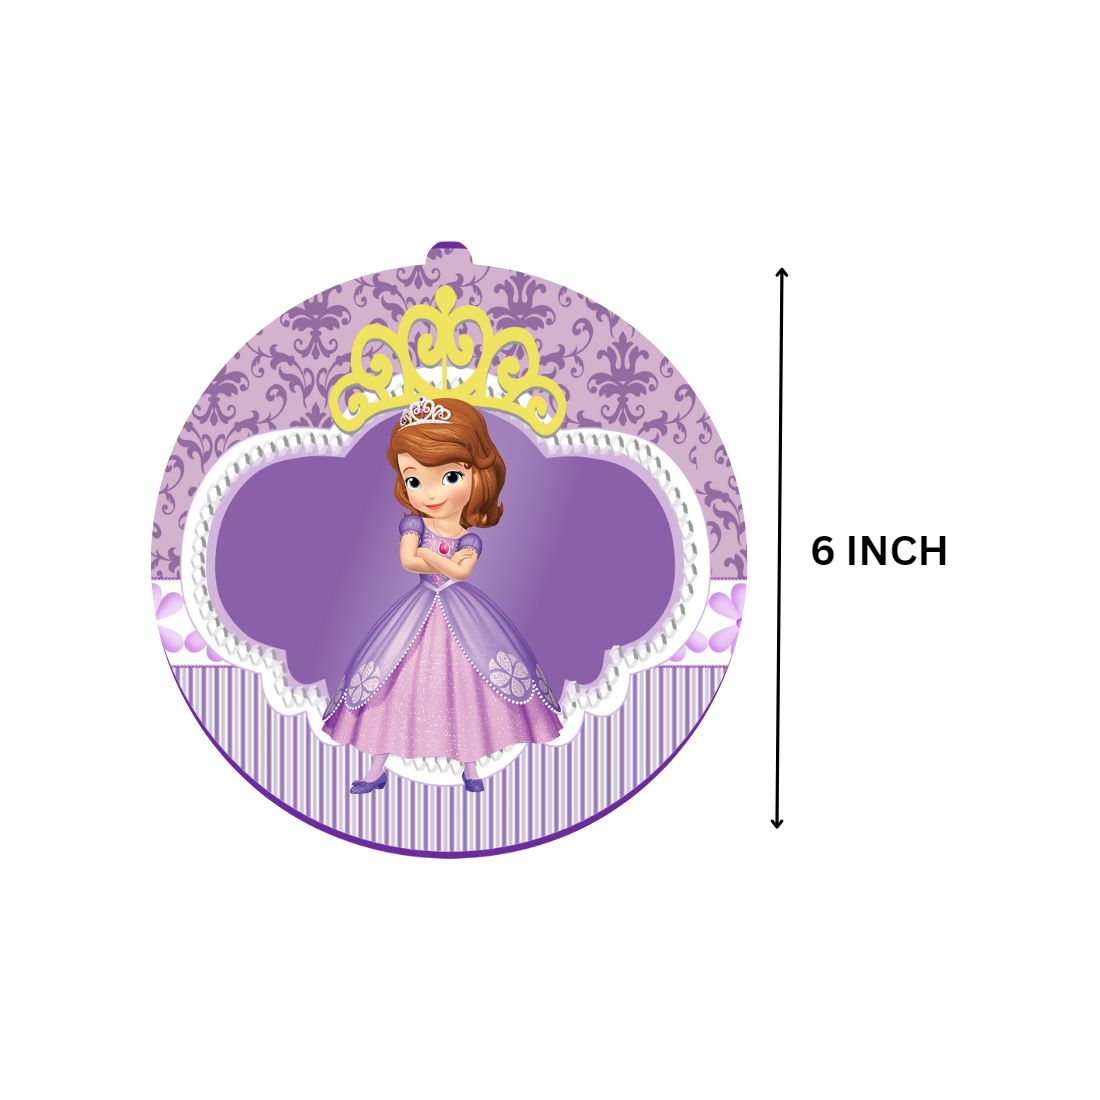 Sofia Theme Model 2 Birthday Kits - (6 Inches/250 GSM Cardstock/Purple , White & Pink/54Pcs)